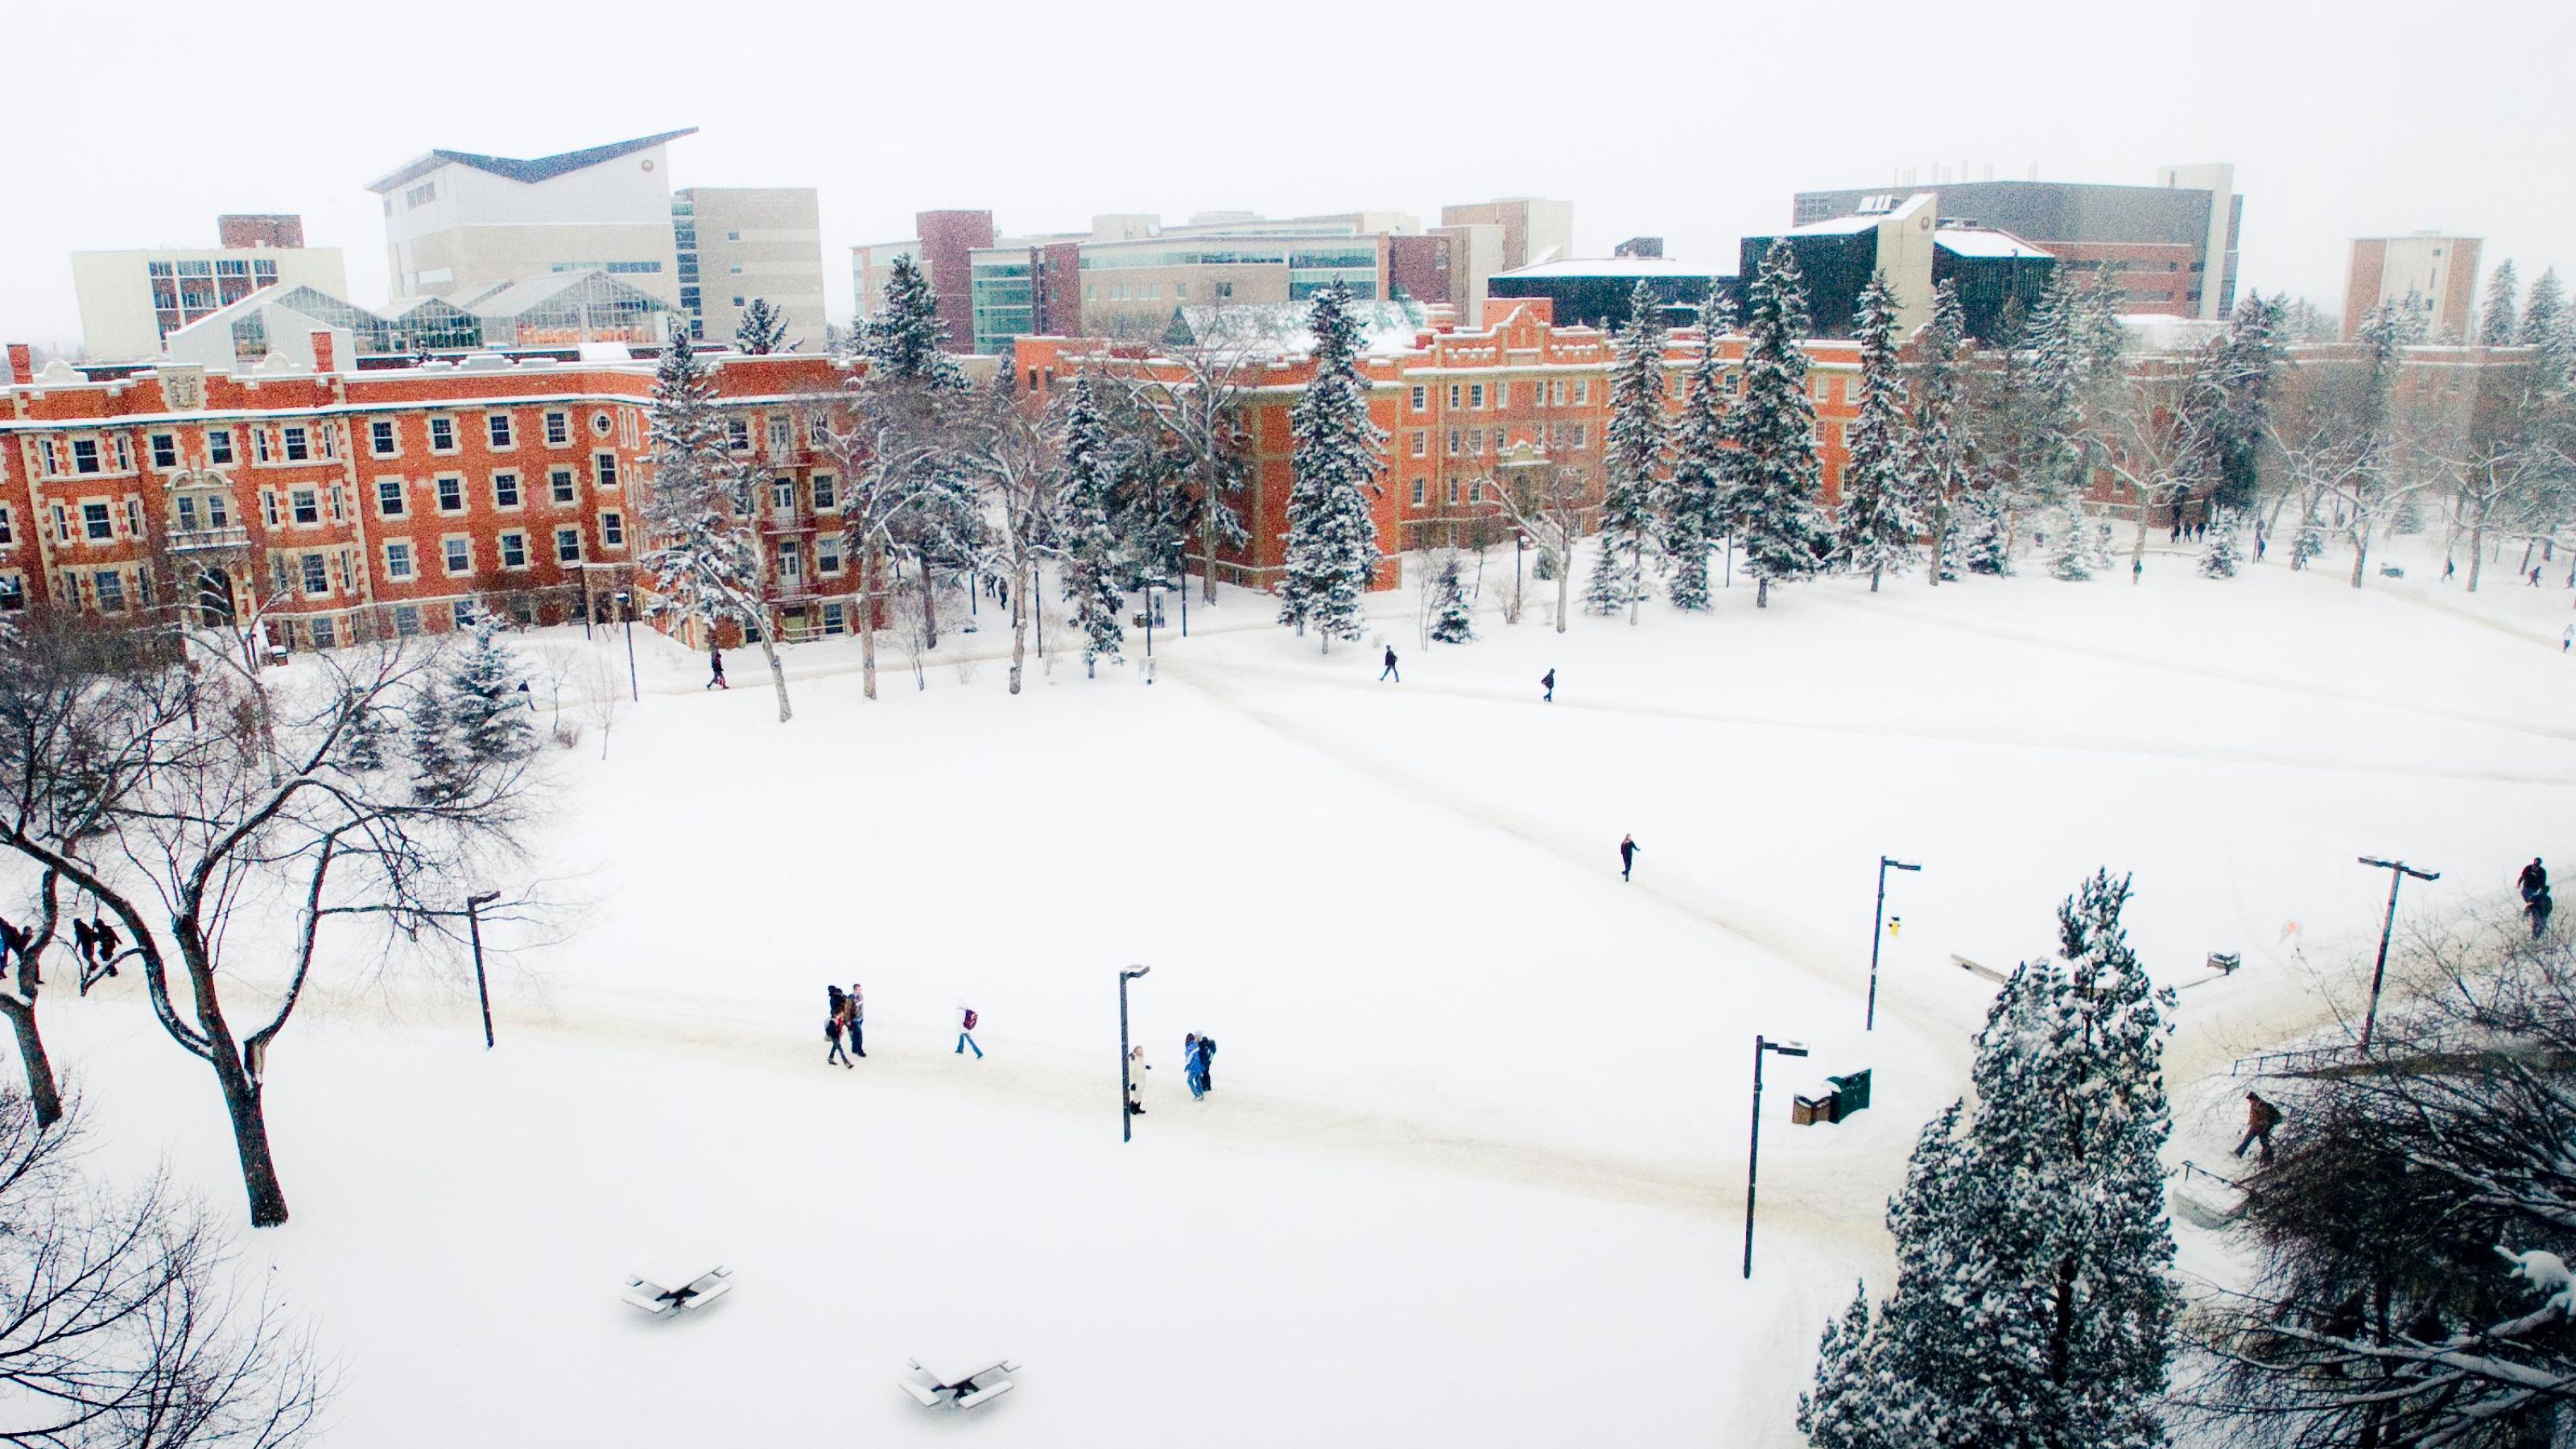 outdoor winter scene of main quad on North Campus